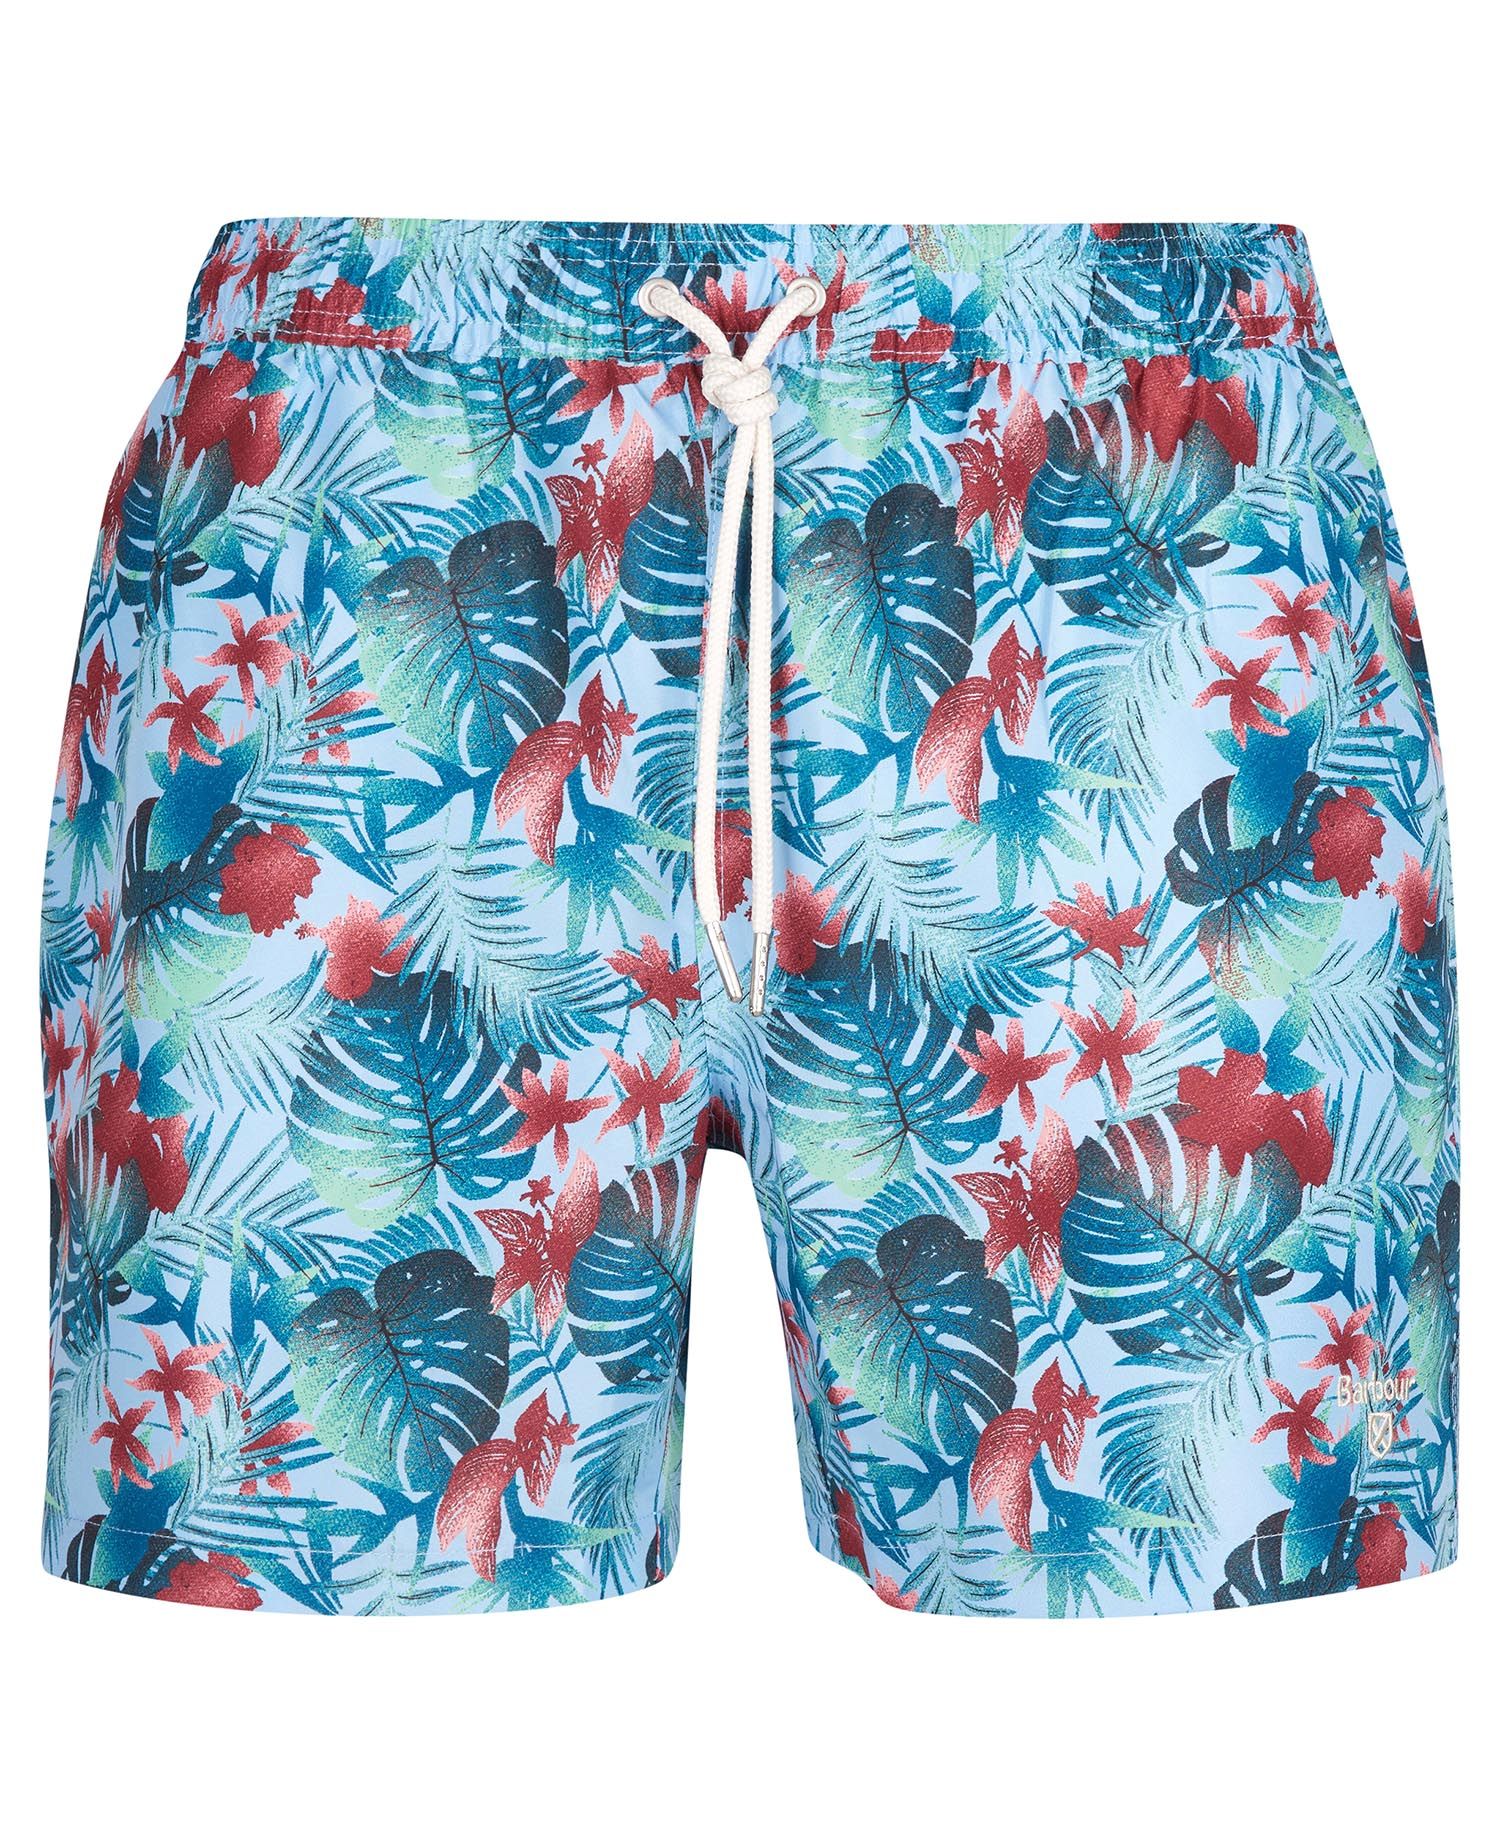 Hawaiian Print Swim Shorts in Powder Blue by Barbour - Hansen's Clothing